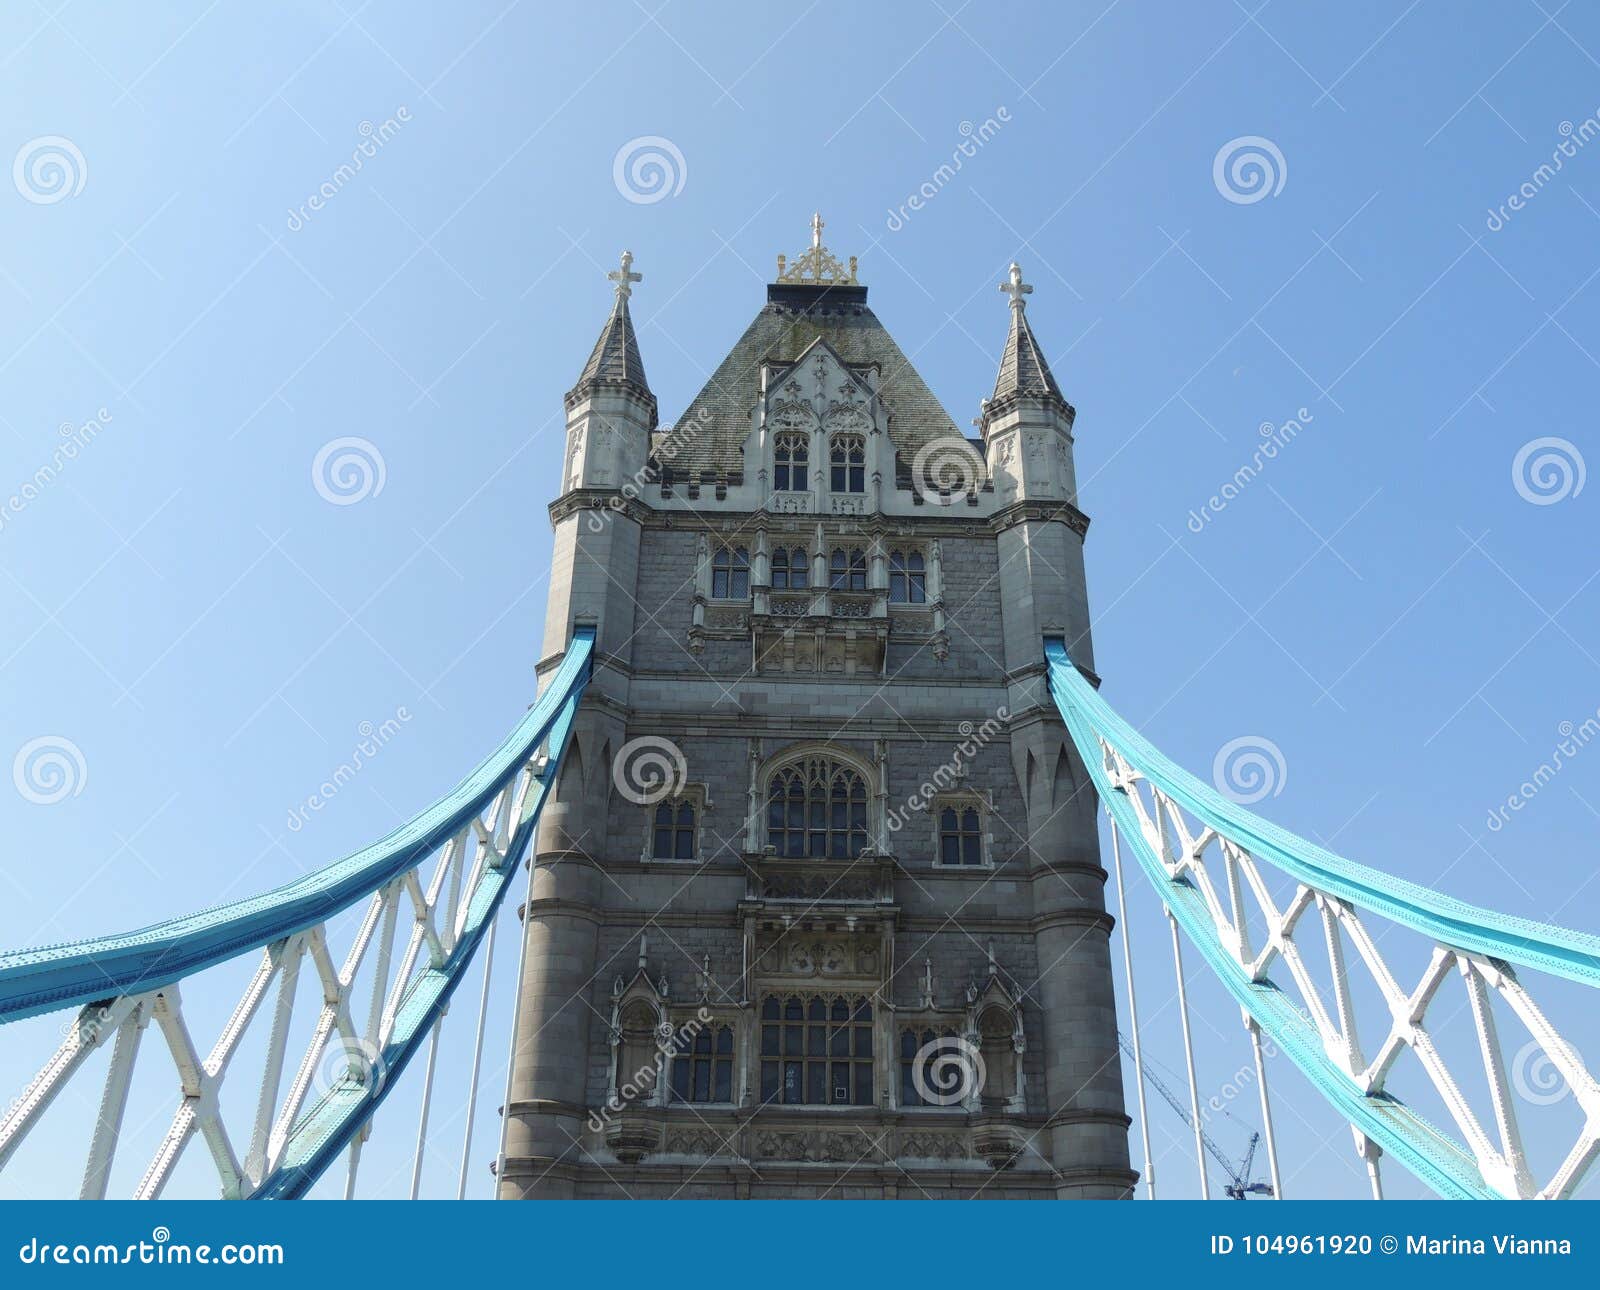 tower brigde - london city